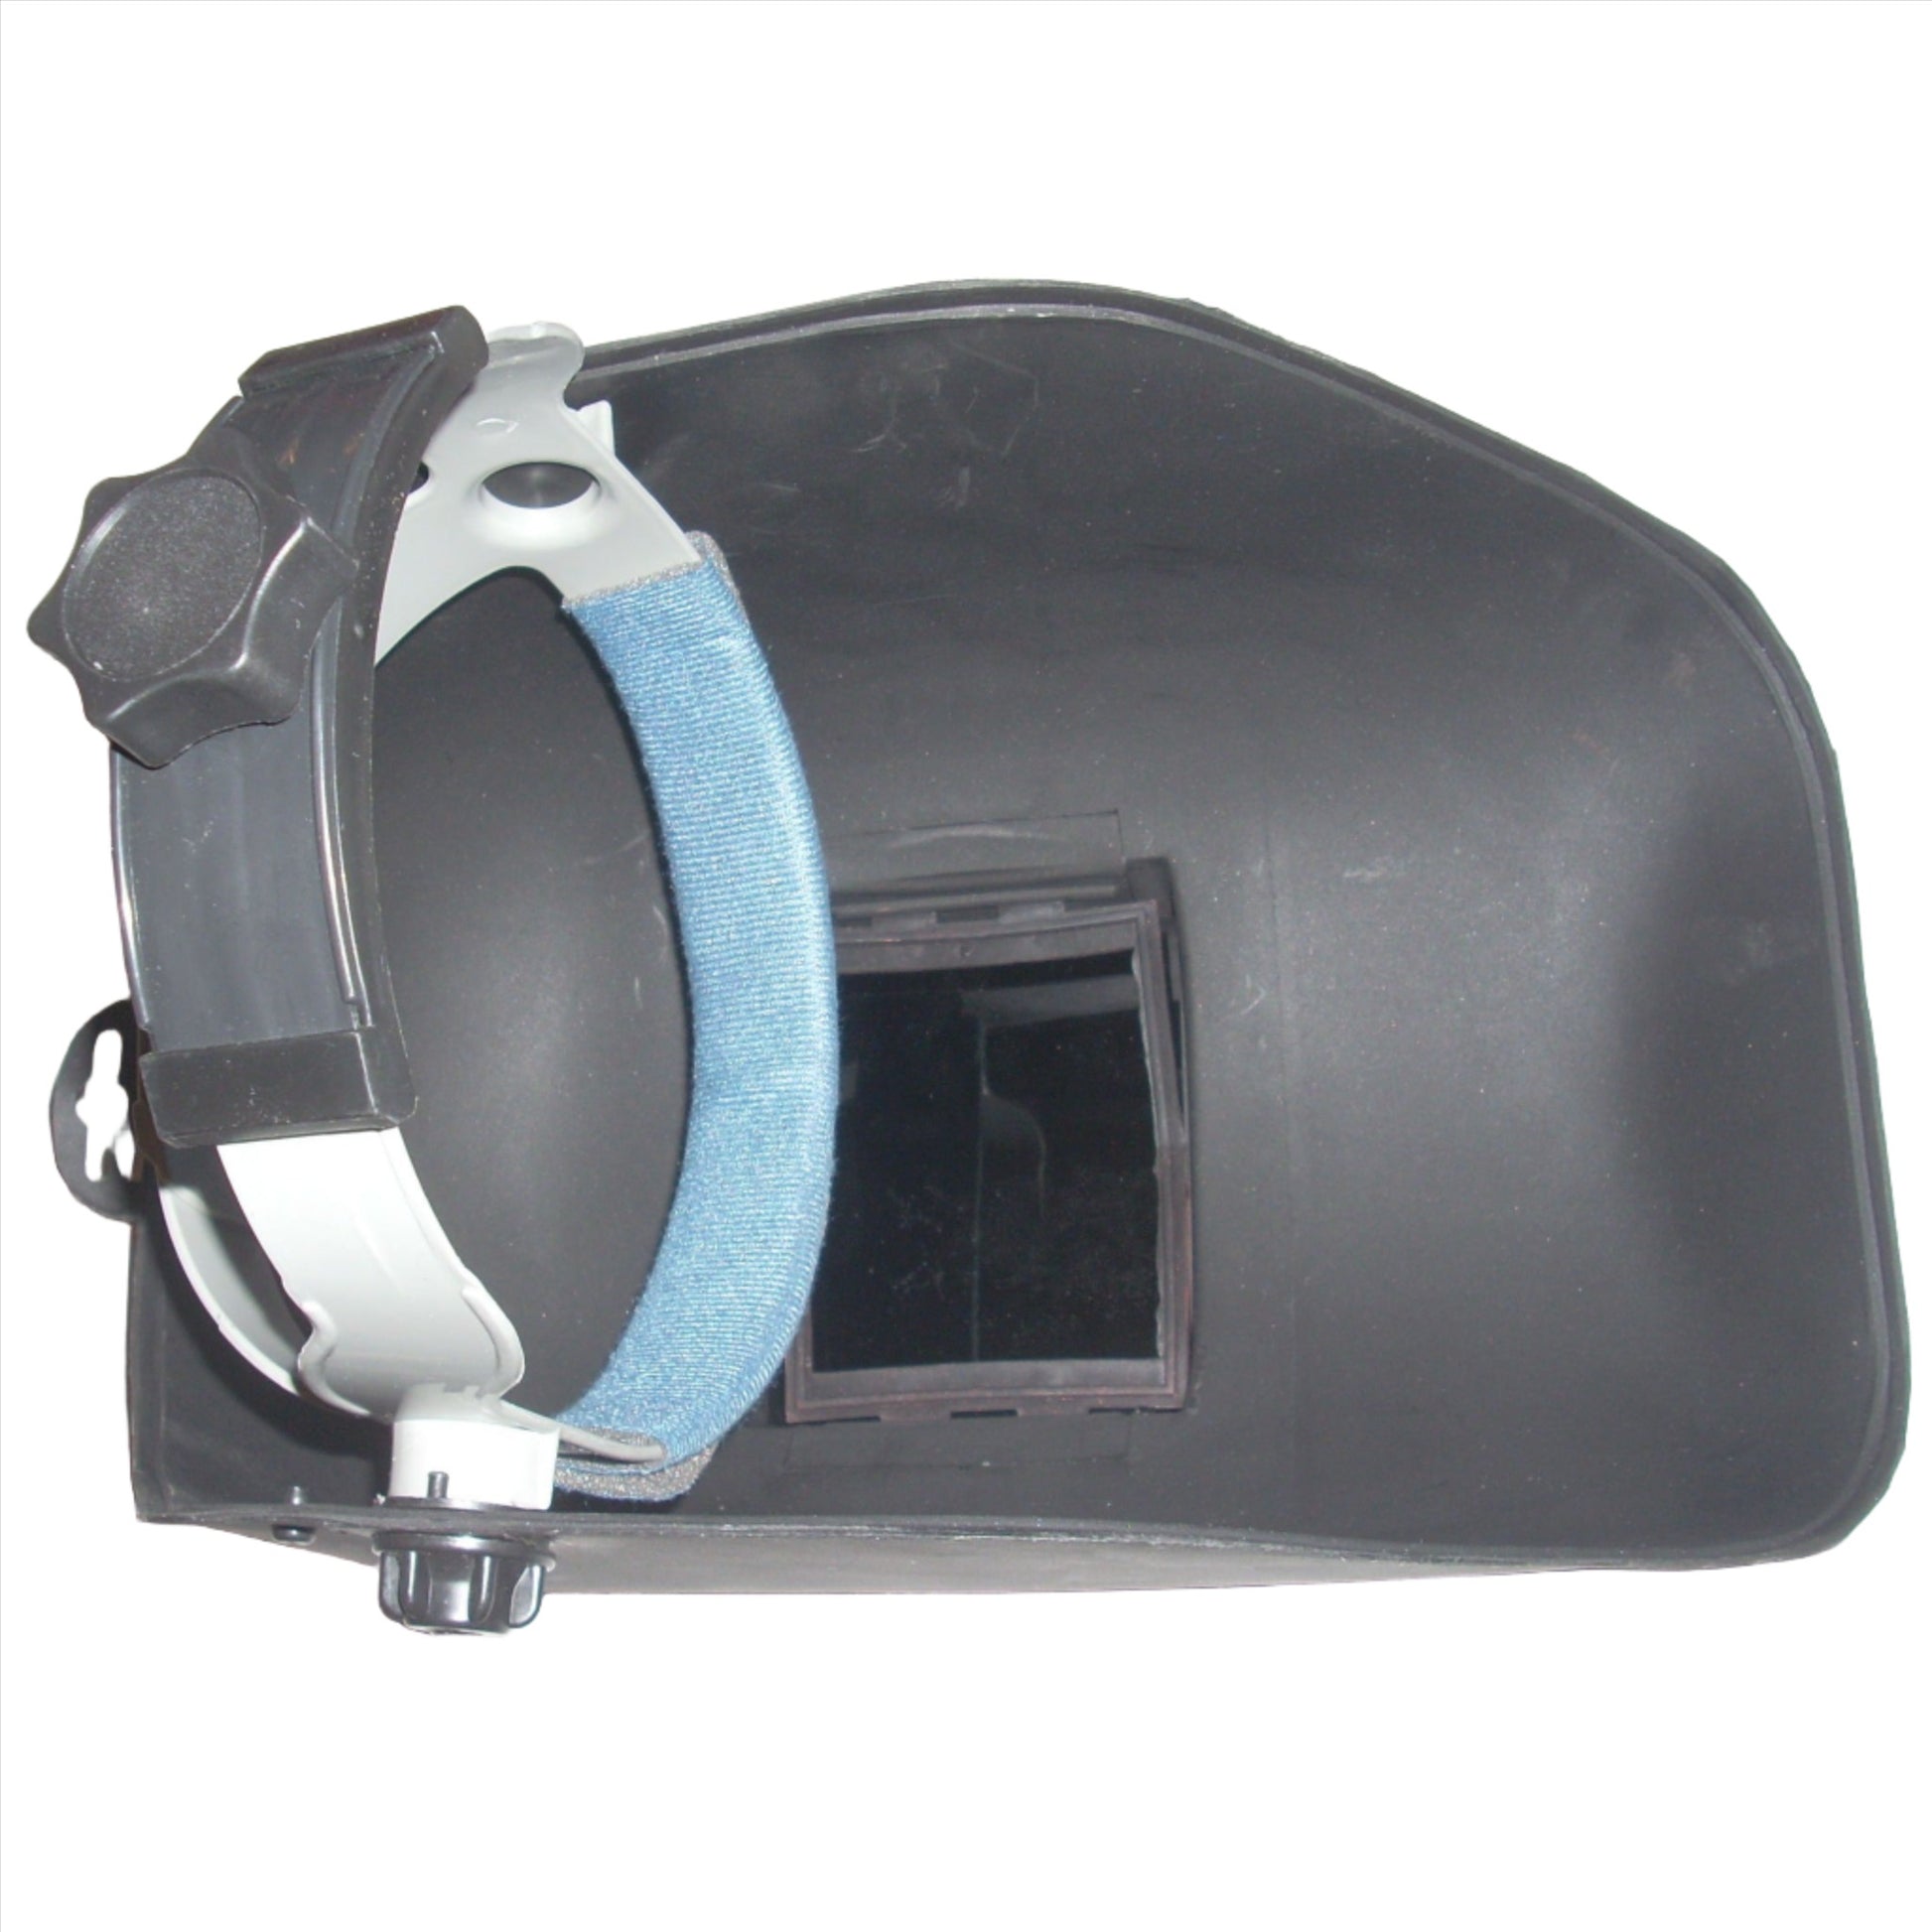 Marigases Visitor Hobby Welding Helmet Shade 10 Fixed Front Adjustable Headgear - ATL Welding Supply